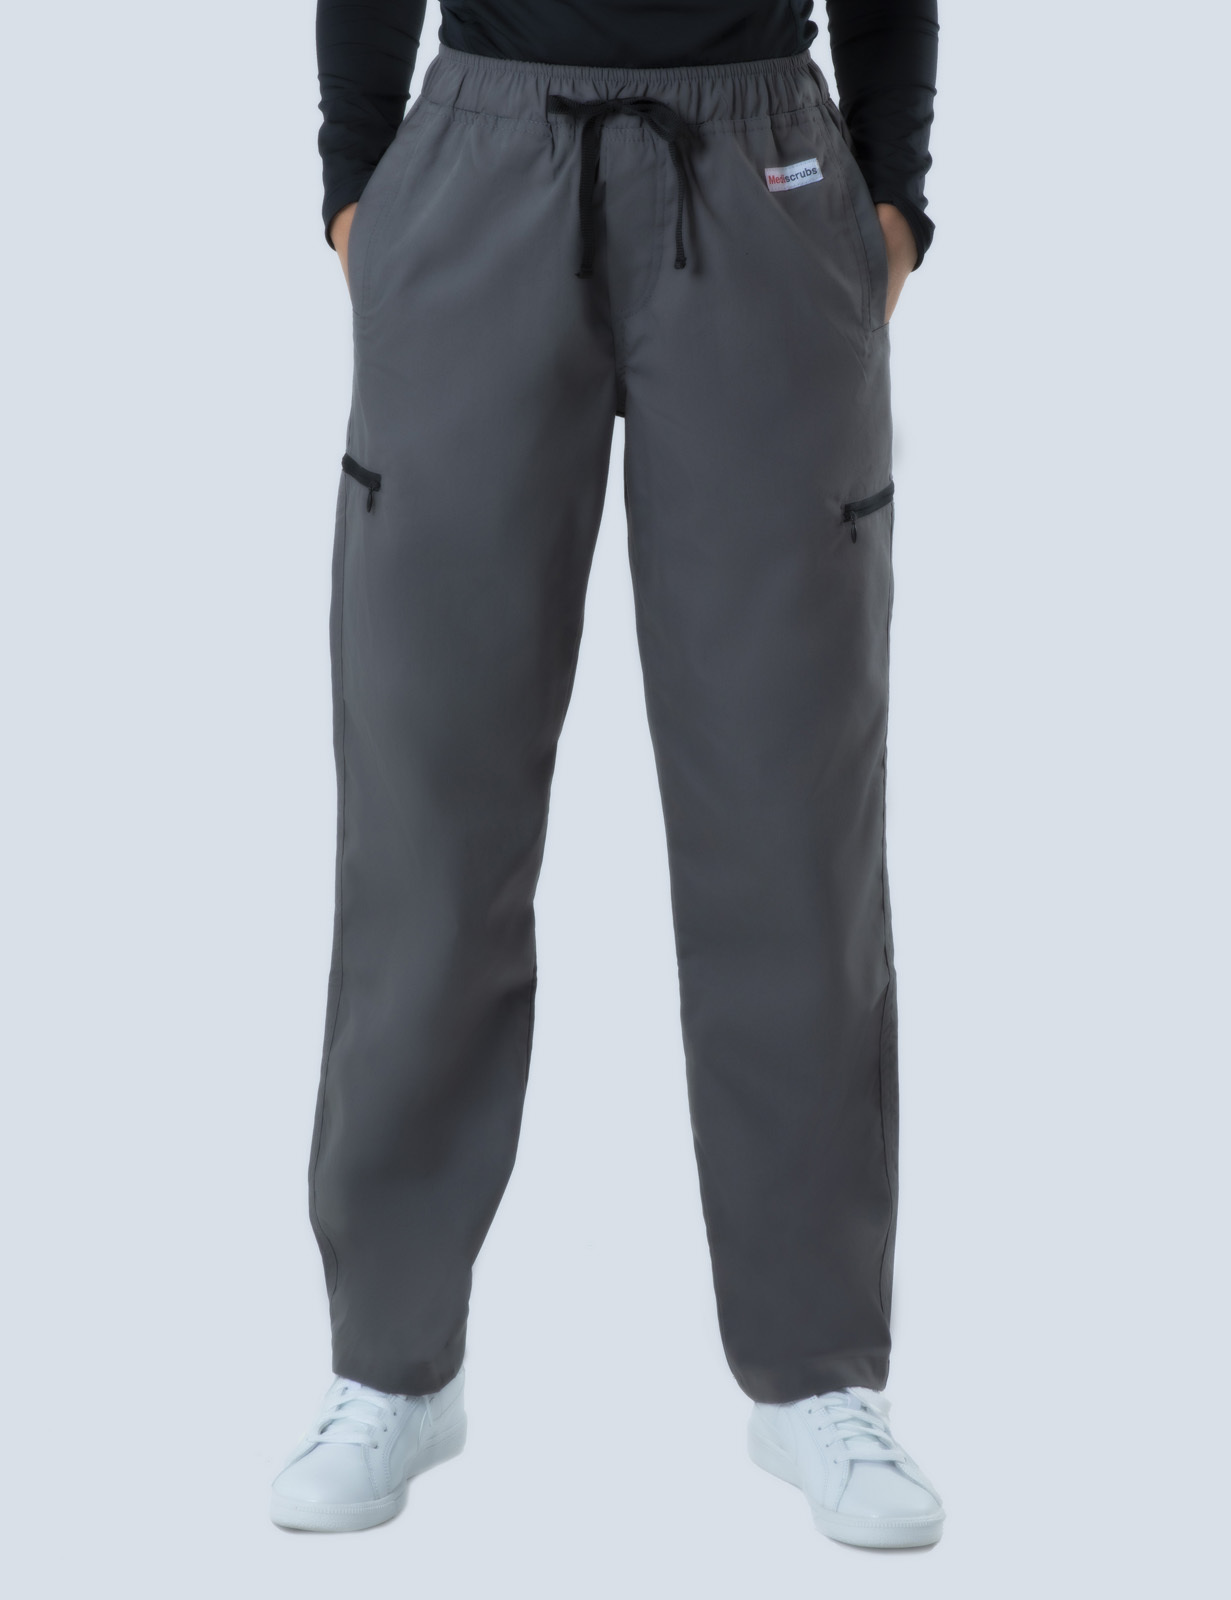 Women's Utility Pants - Steel Grey - X Large